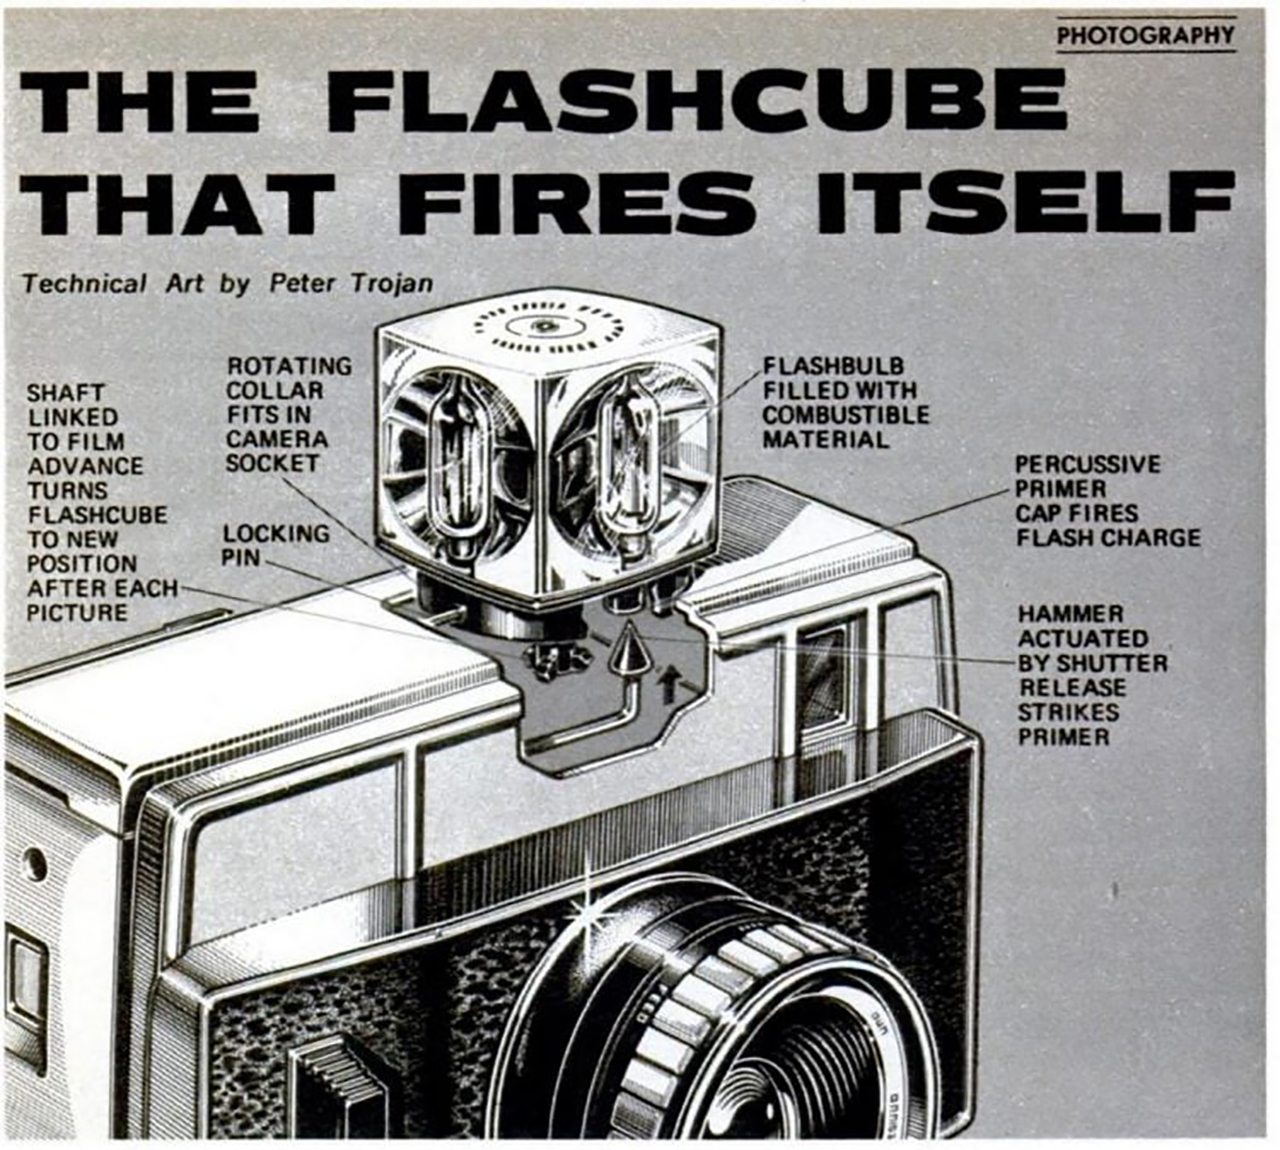 1280X1150PX-Popular-Mechanics-Aug-1970-How-a-flash-cube-works-vWA24